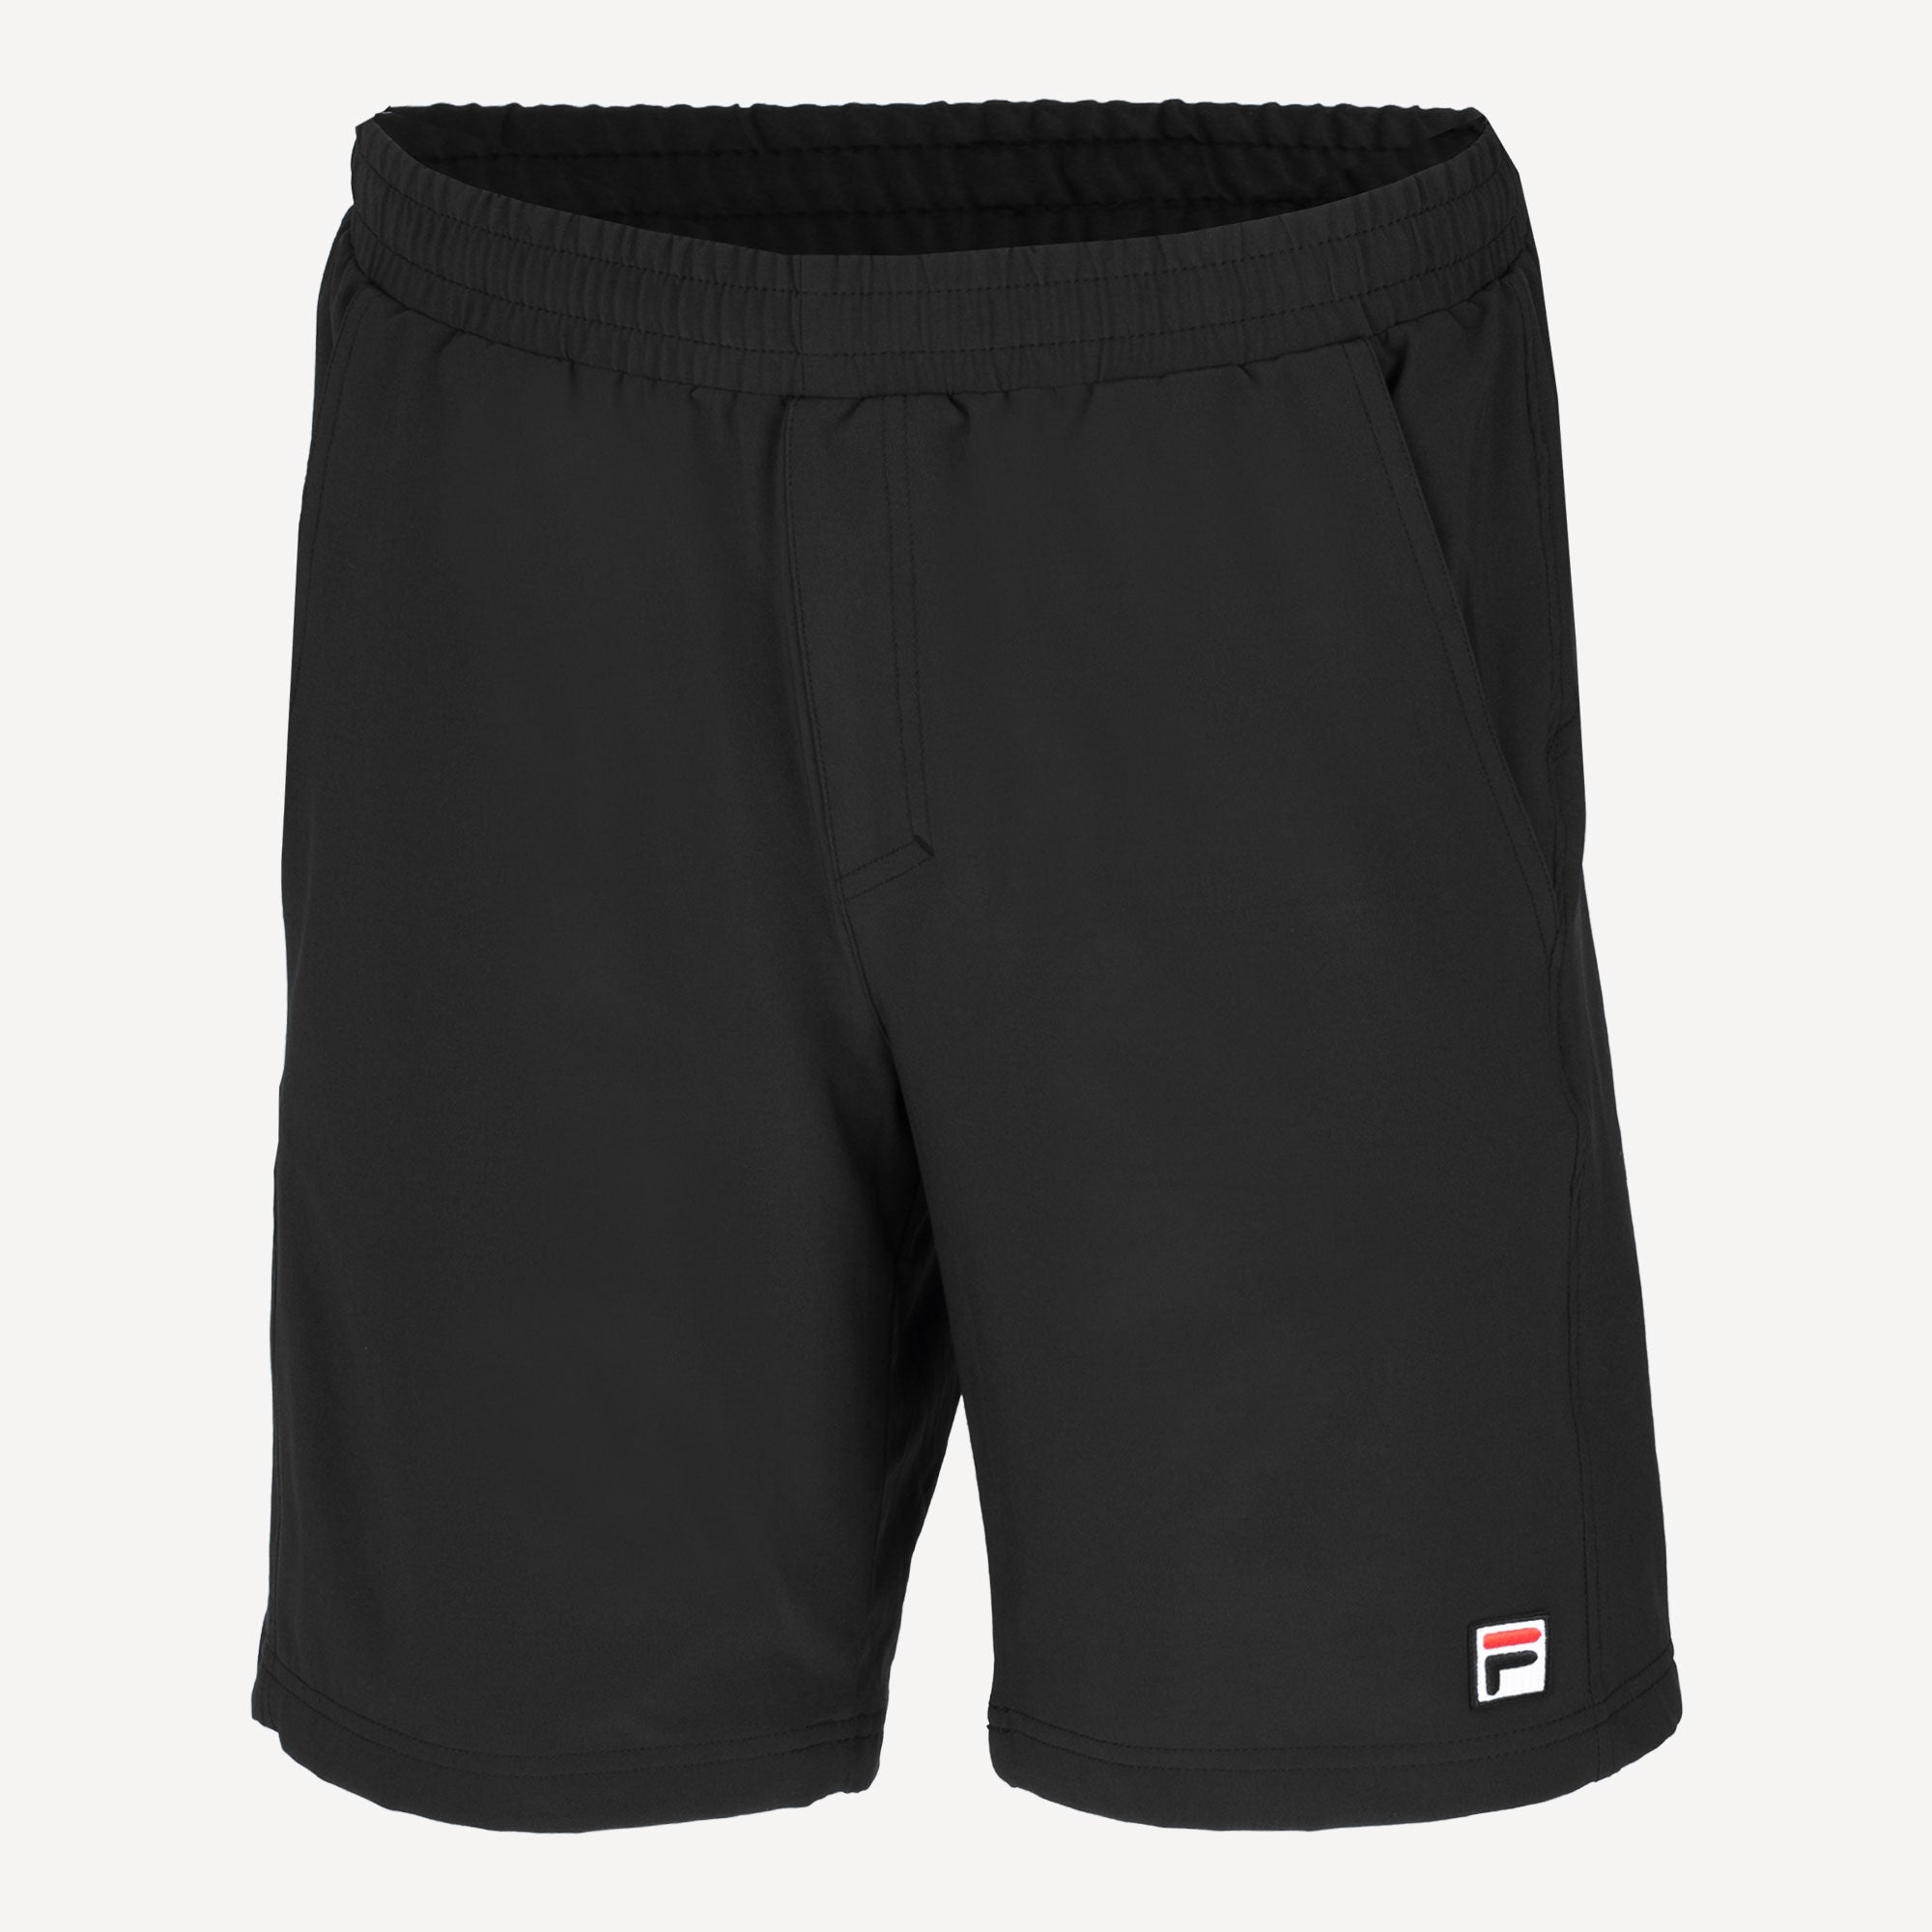 Fila Santana Men's Tennis Shorts Black (1)